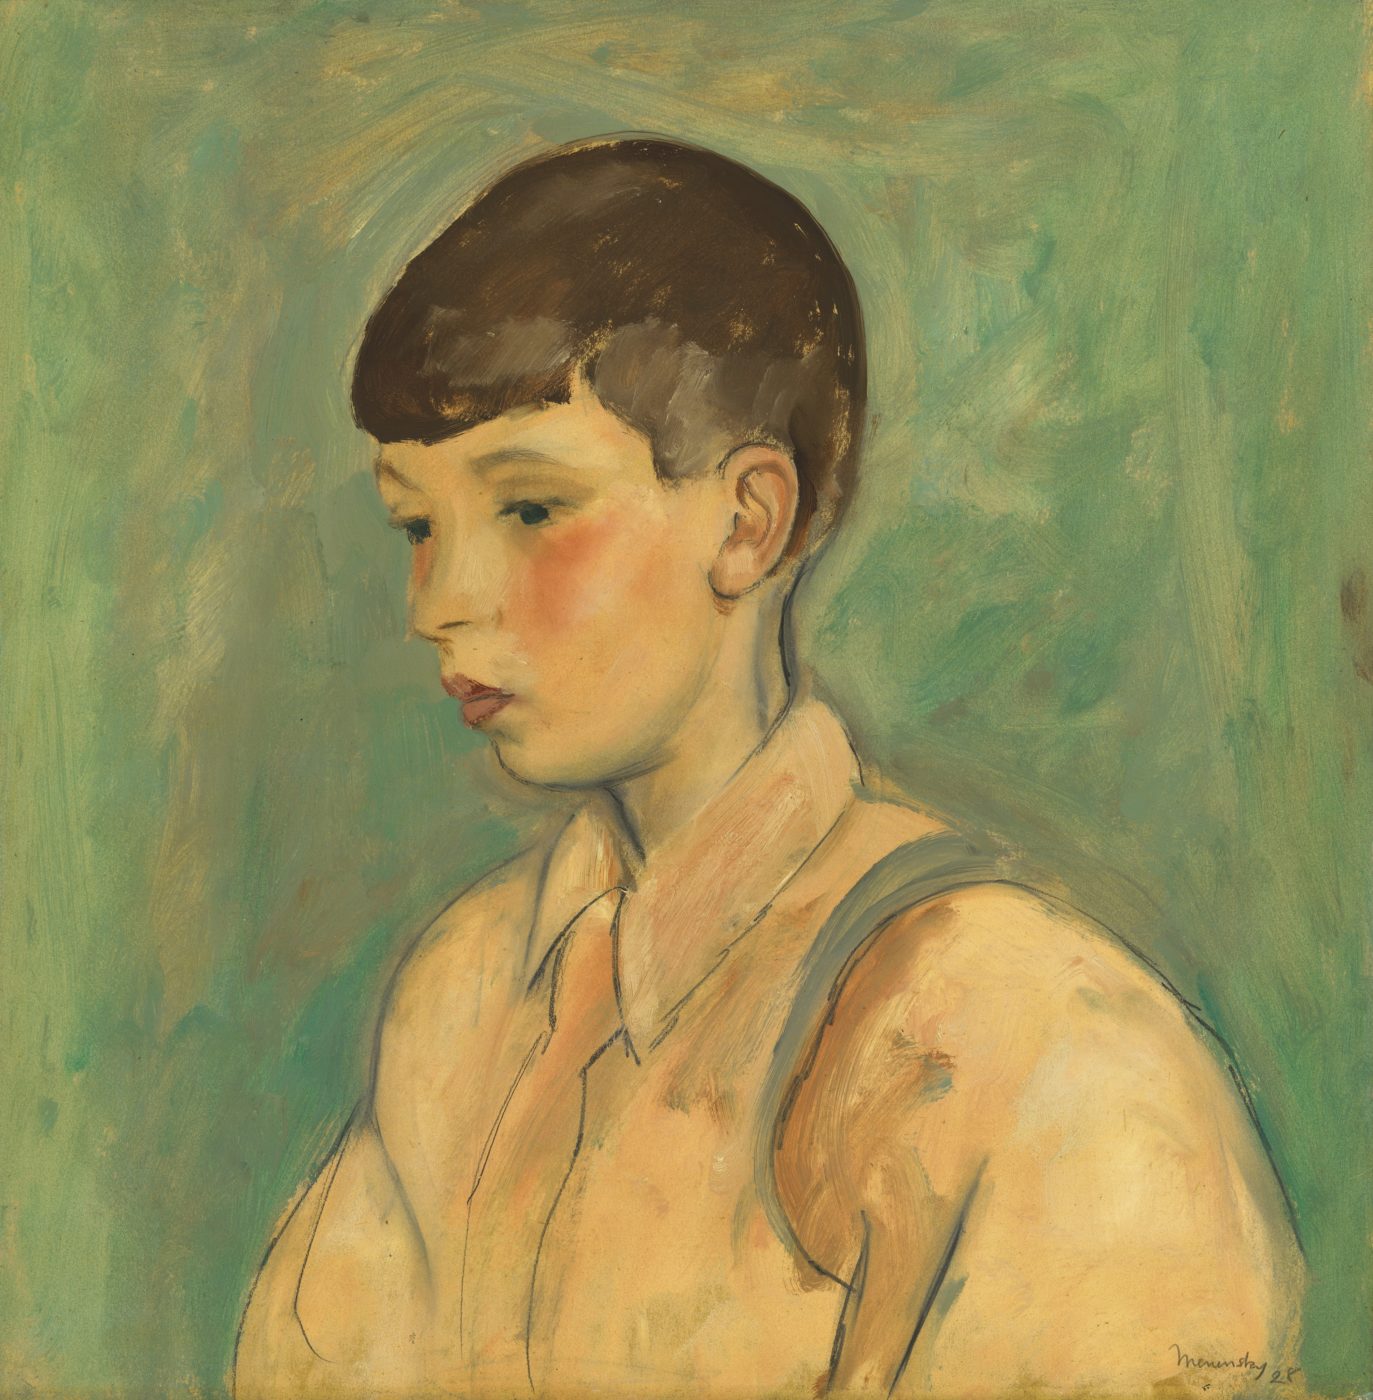 Bernard Meninsky (1891-1950), Portrait of a Boy